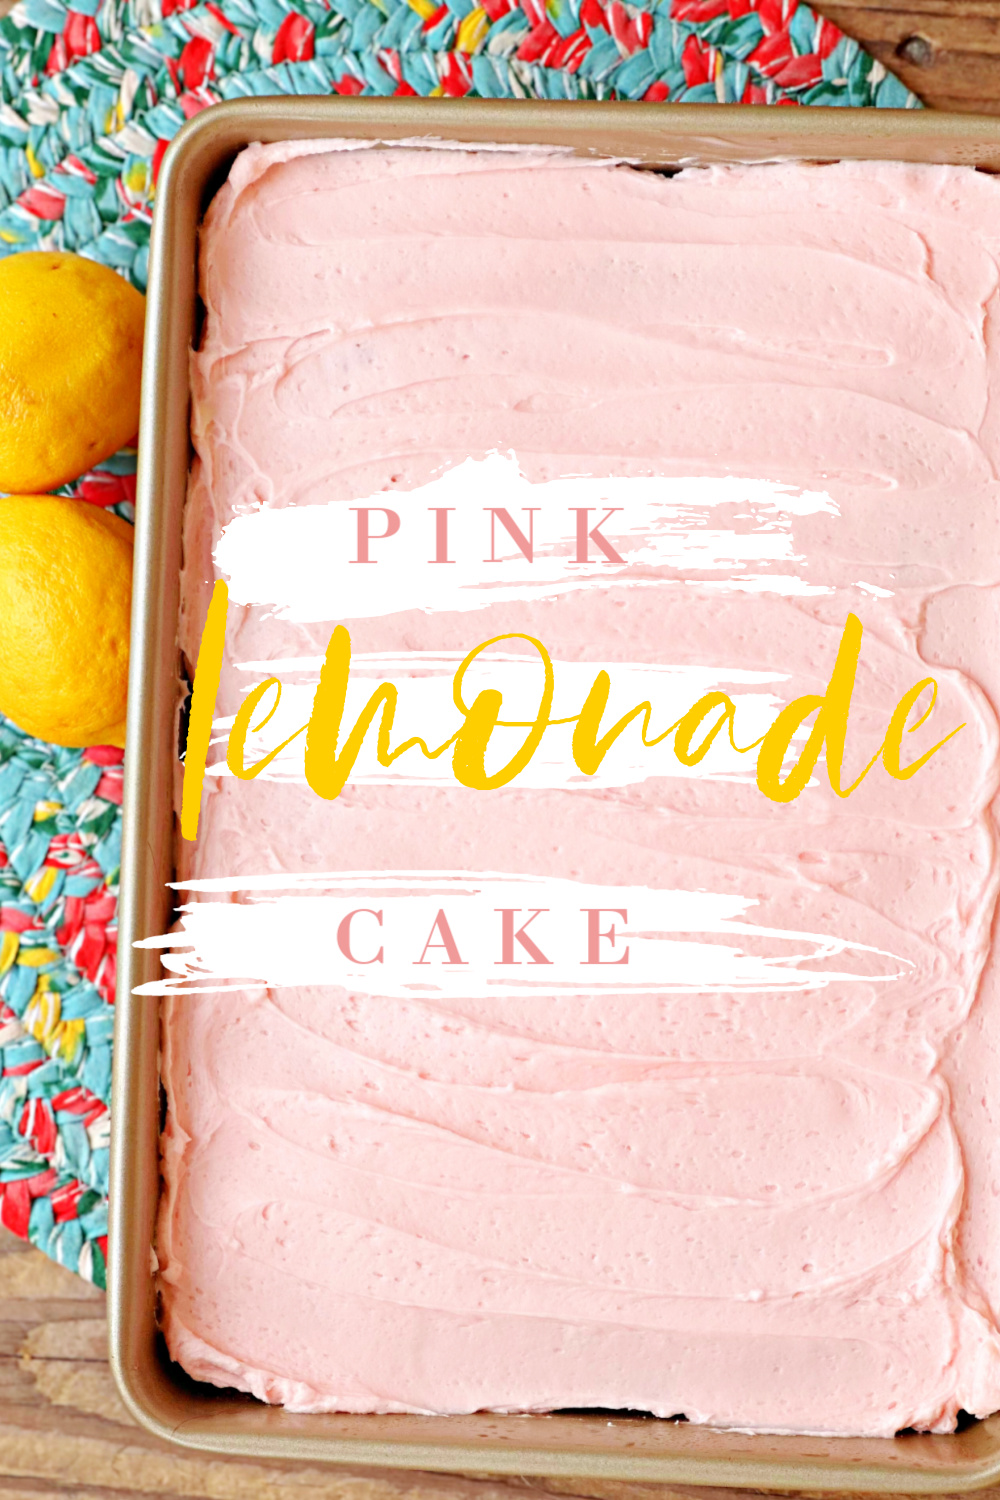 Pink Lemonade Cake #lemonade #cake #cakerecipe #dessert #potluck #partyfoodideas #picnic #easyrecipe #onepandessert